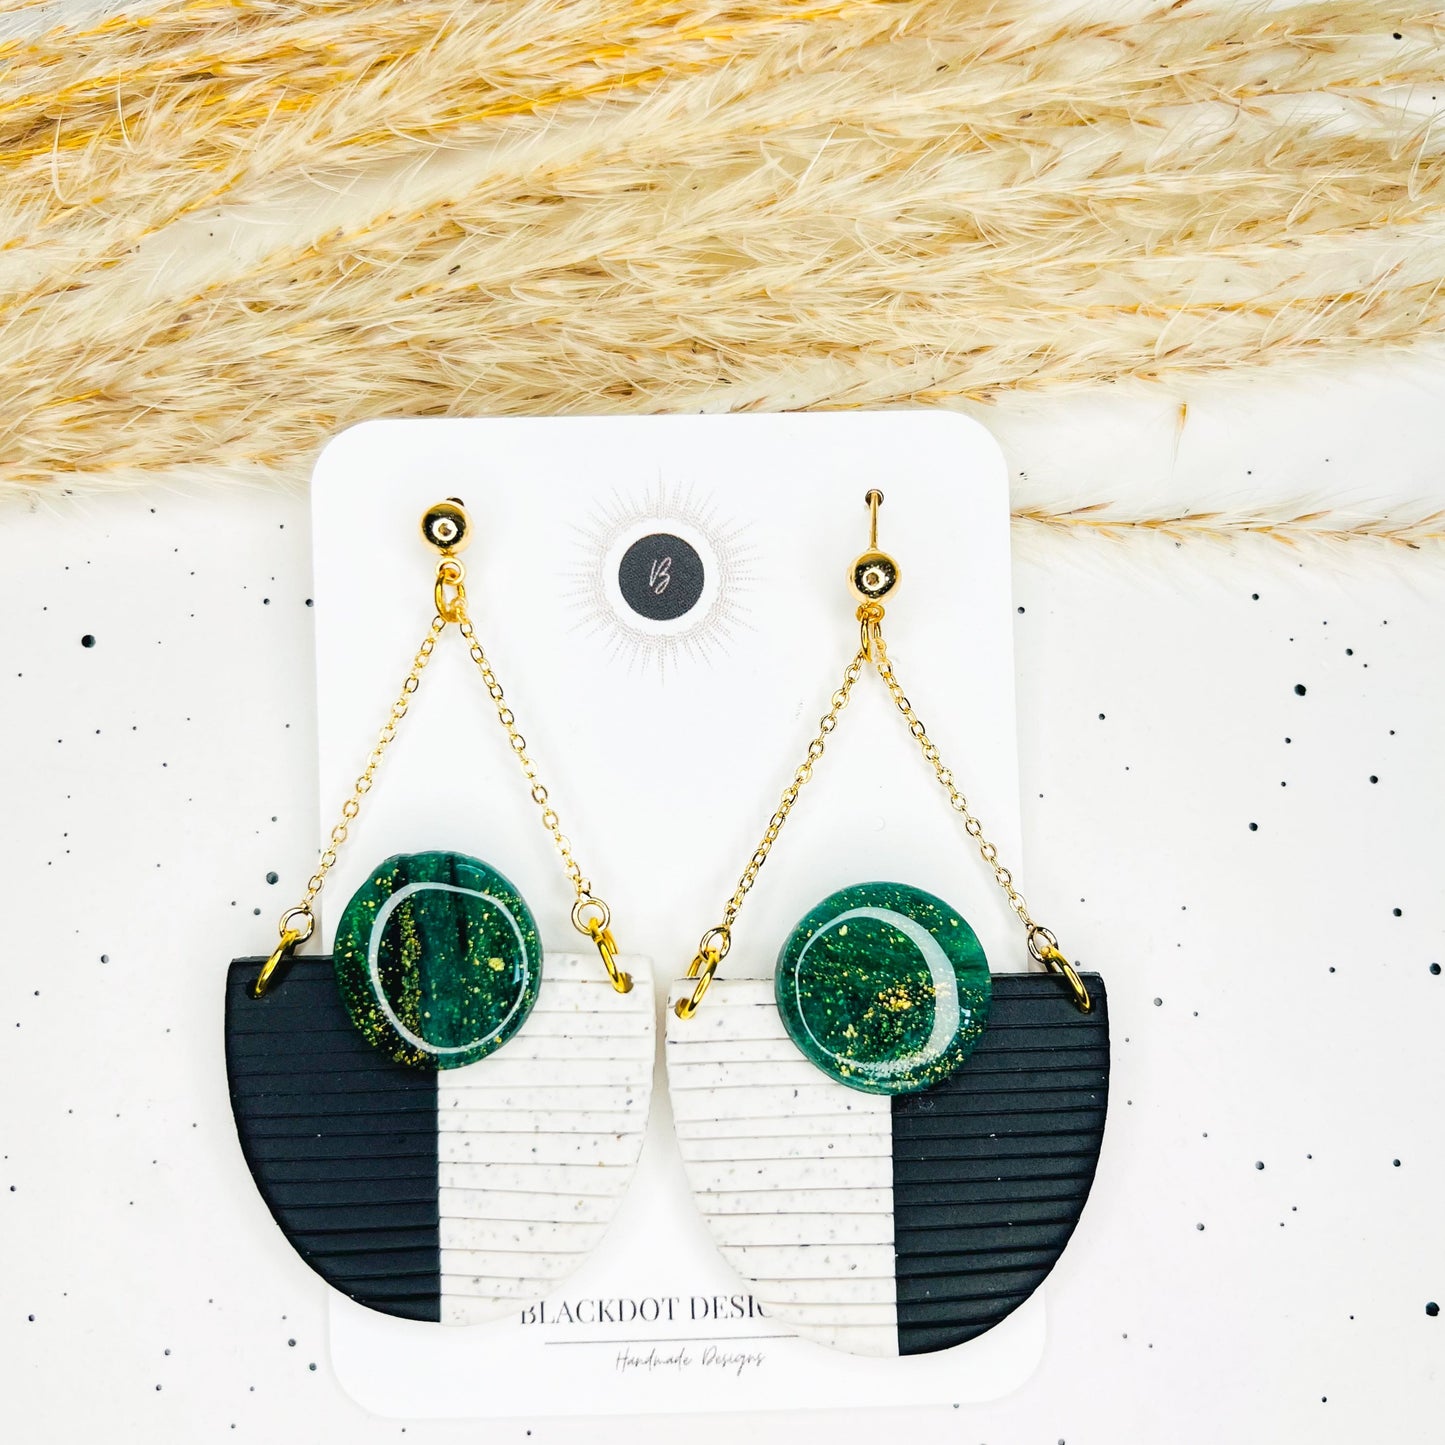 Black, green, and white earrings